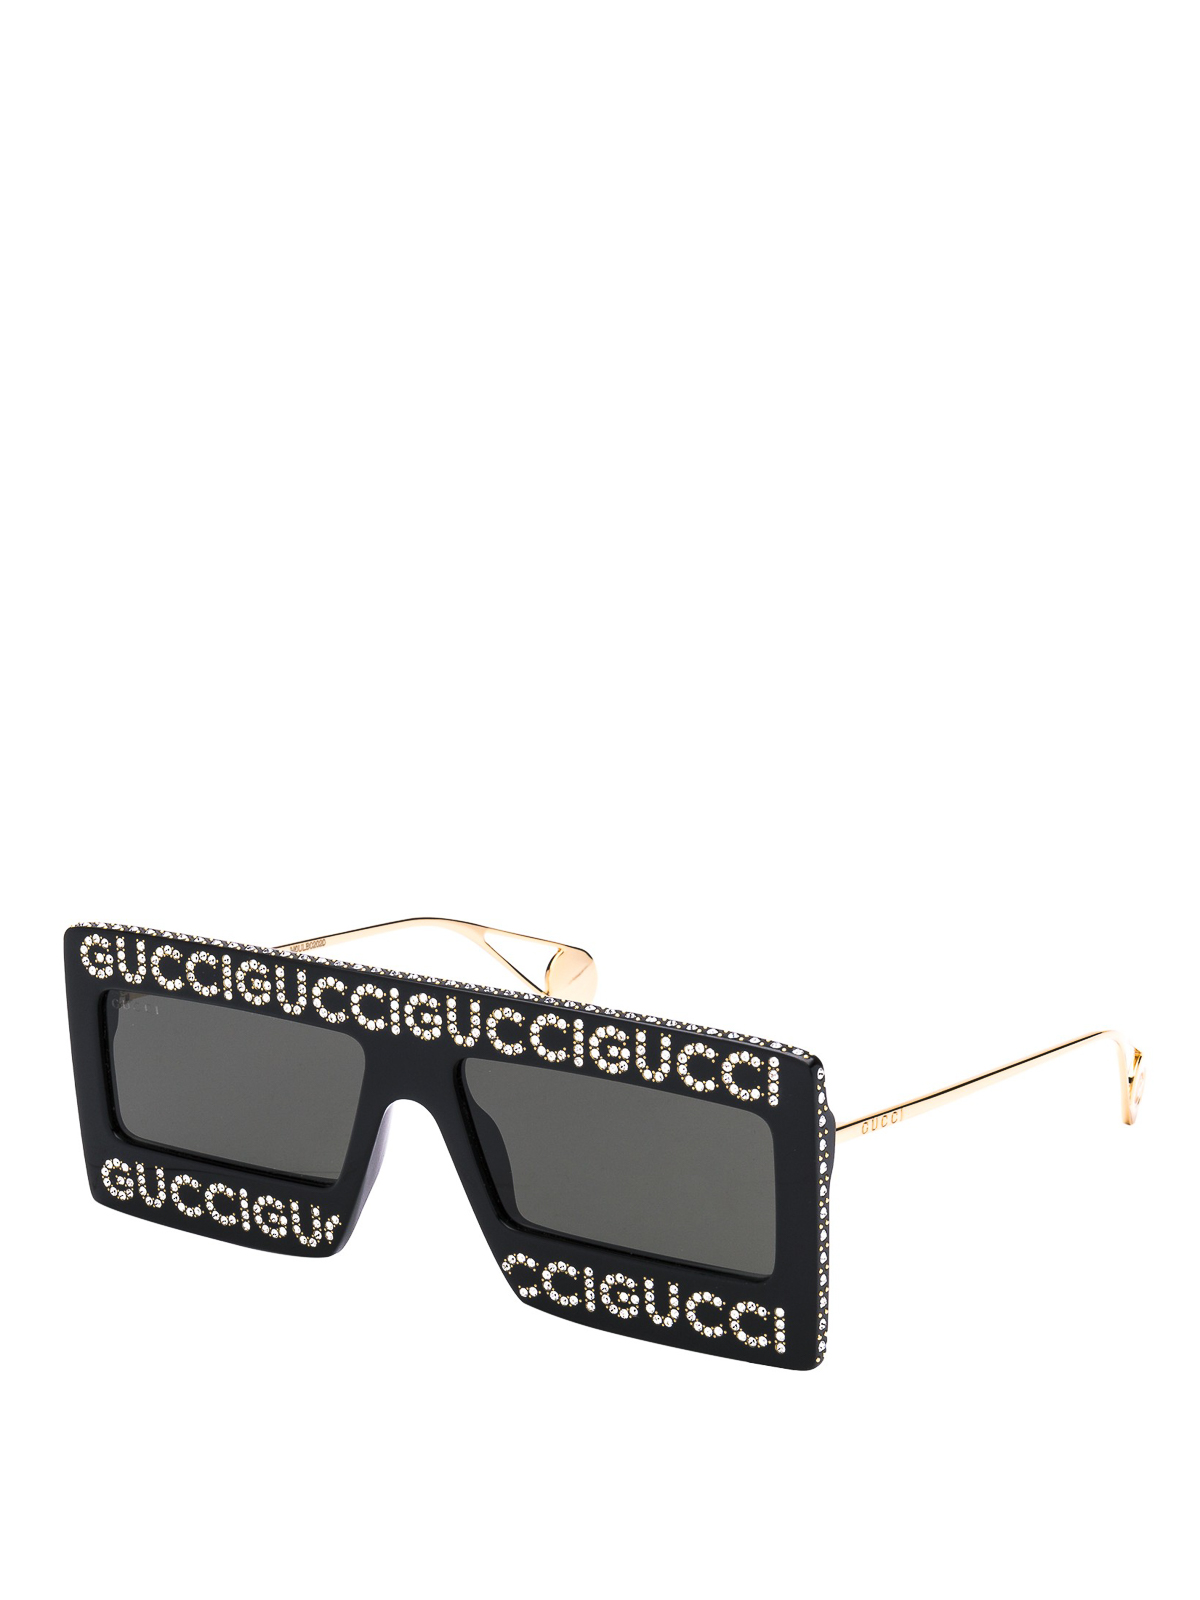 rhinestone gucci glasses